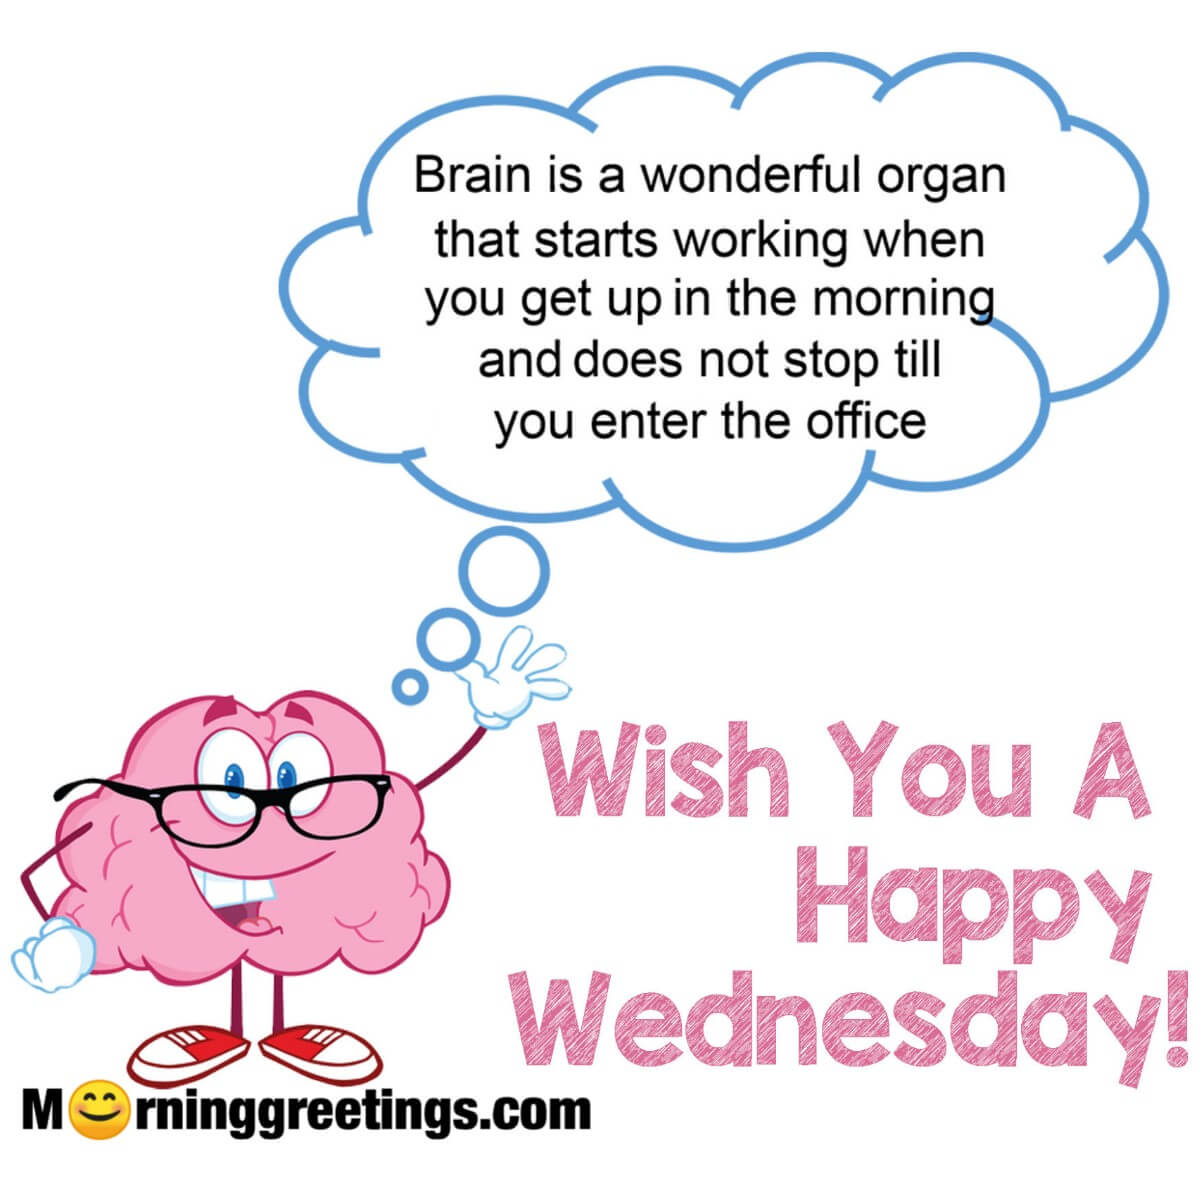 Wish You A Happy Wednesday